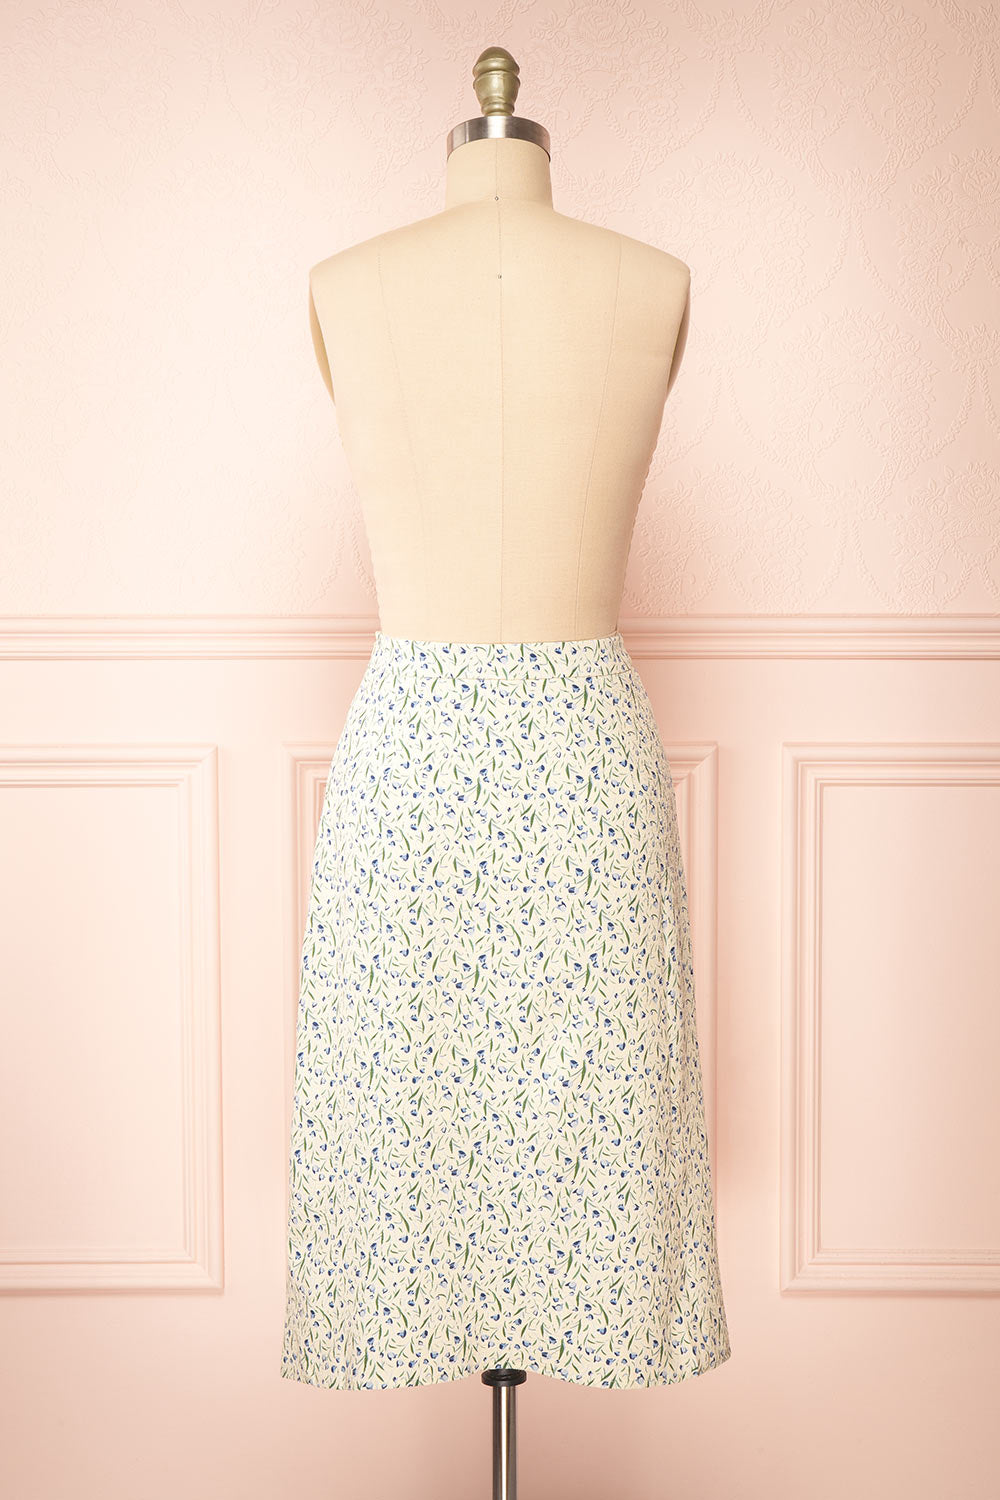 Zowie Midi A-Line Blue Floral Skirt w/ Slit | Boutique 1861 back view